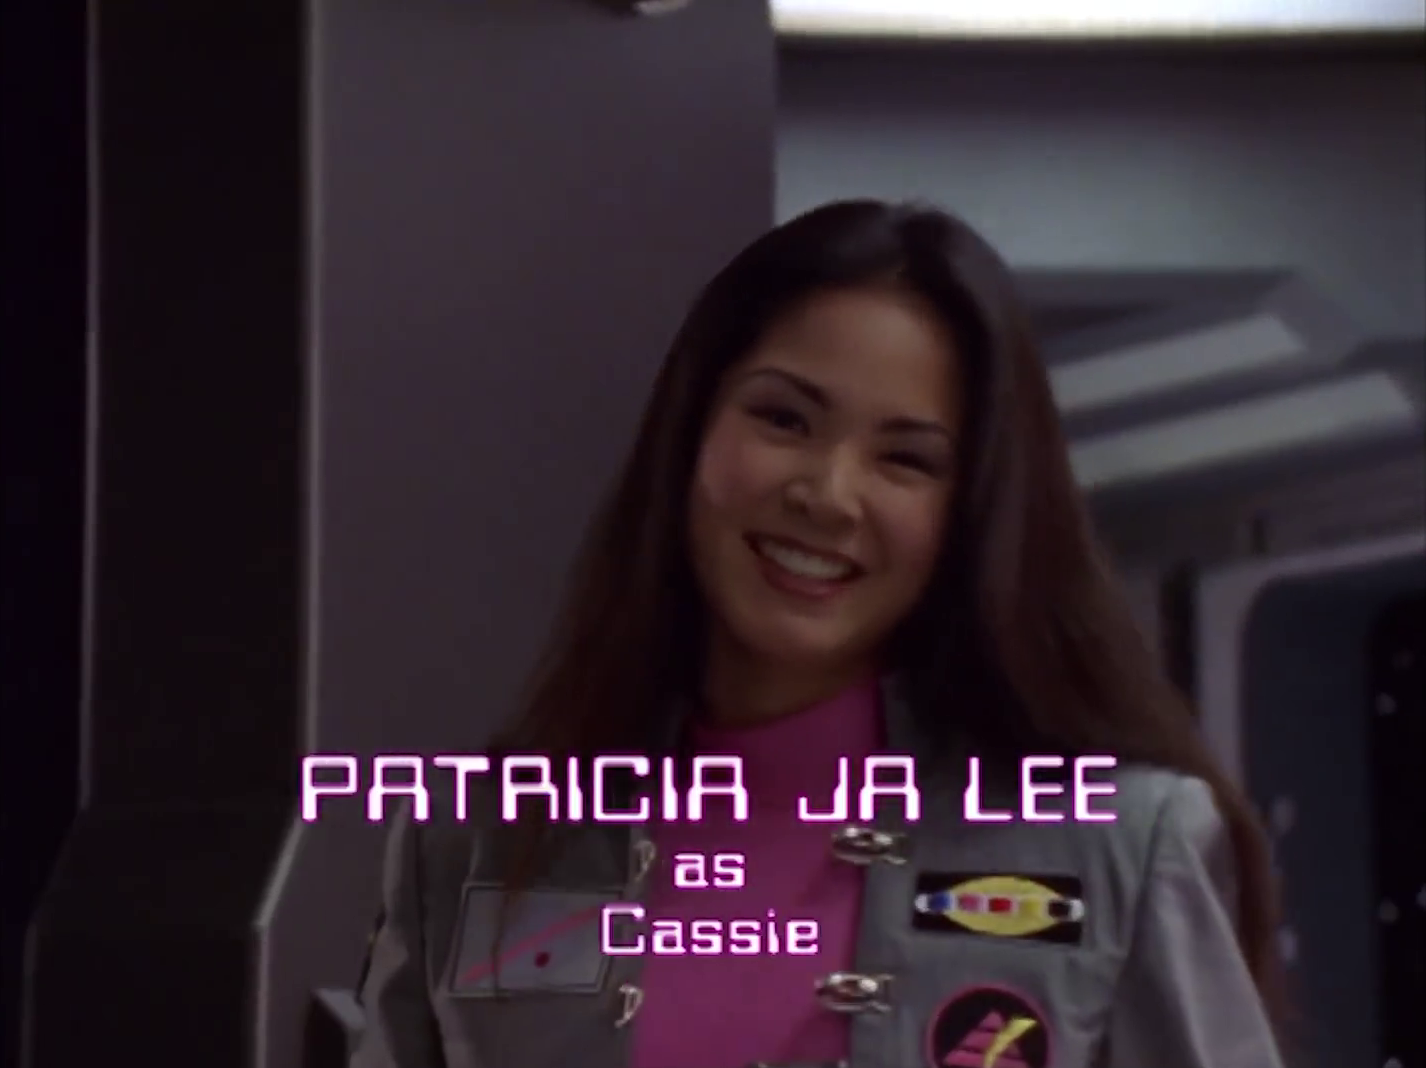 Patricia ja Lee hot. Everyone likes her